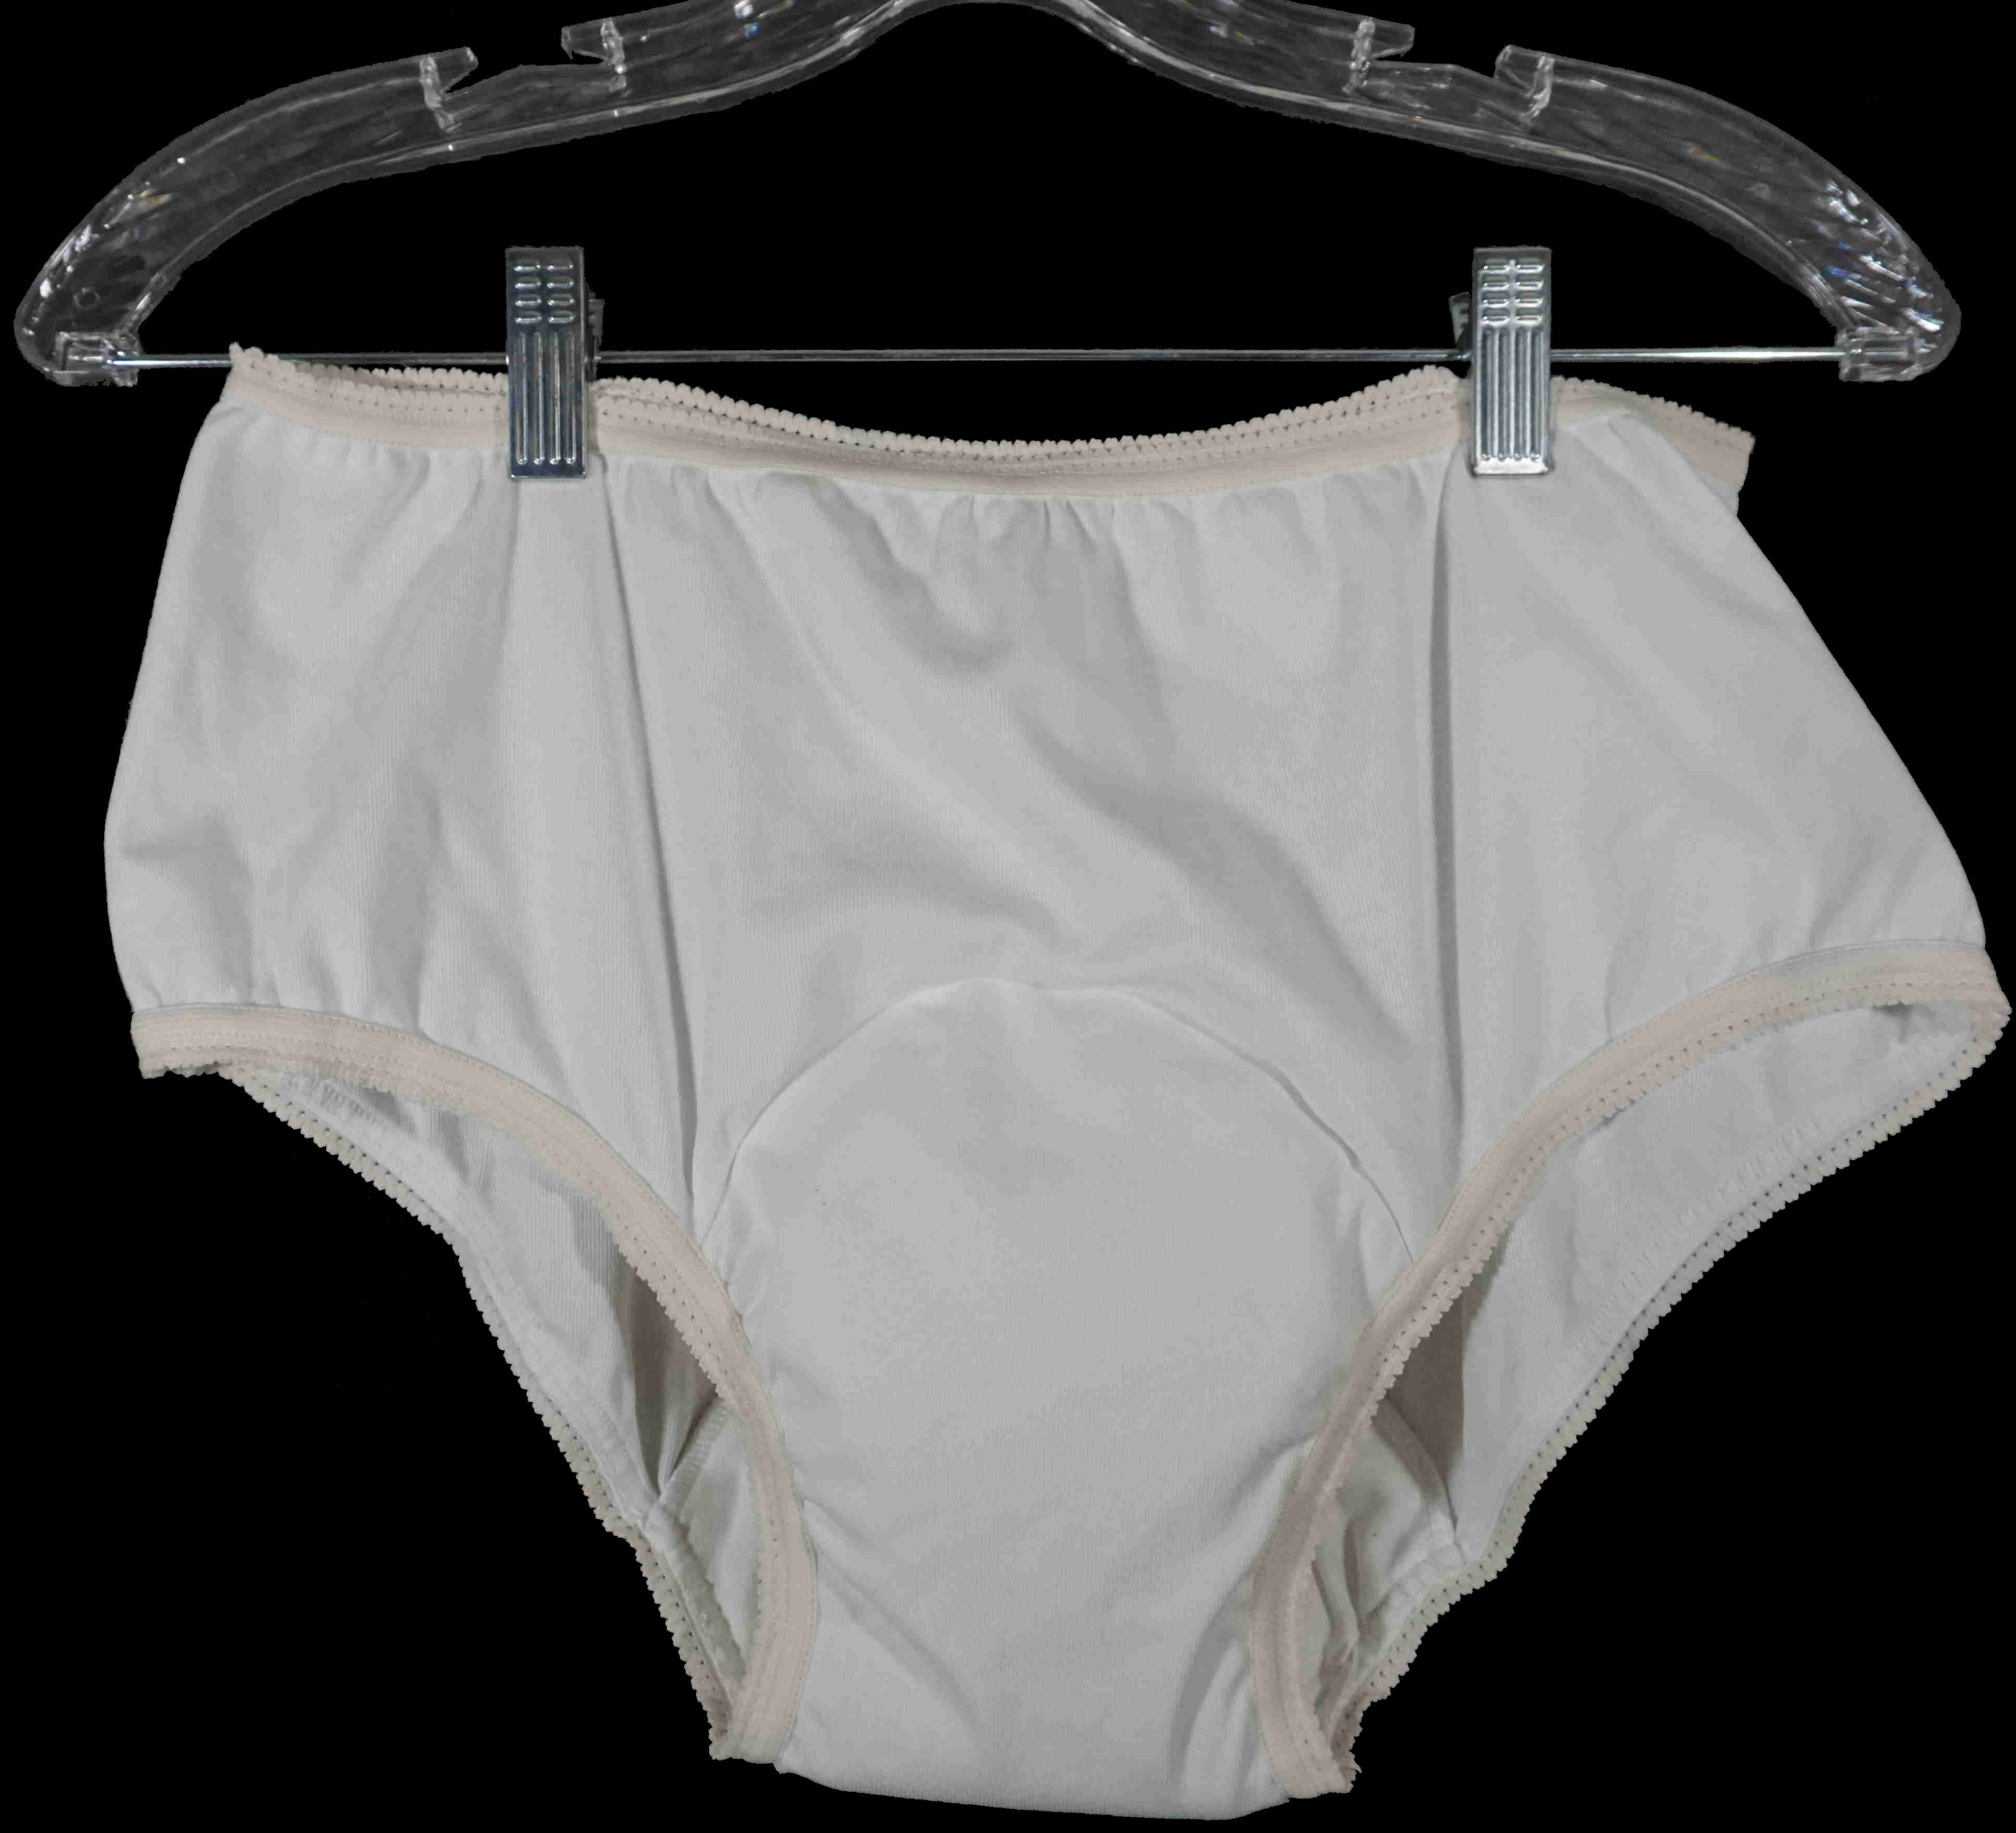 Diaper Metrics: Carer Reusable Protective Underwear Special Review